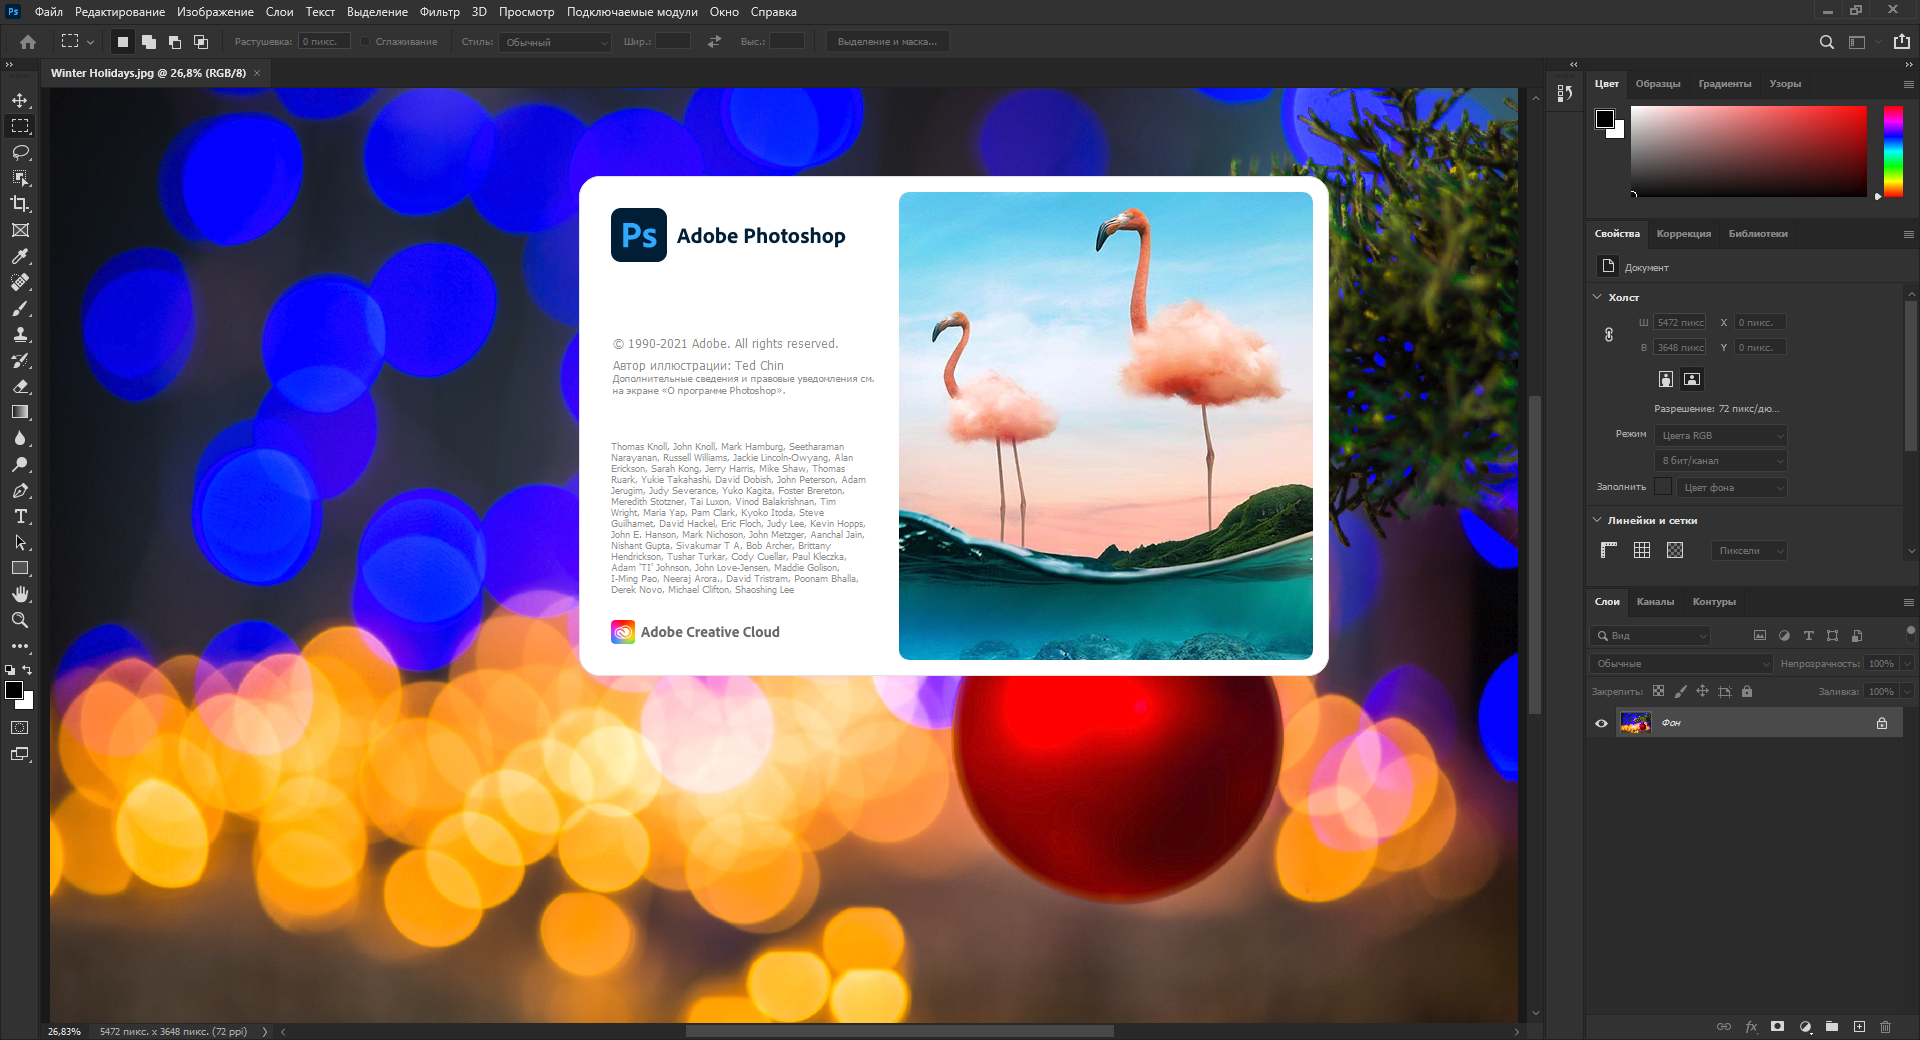 Adobe Photoshop Cc 2015 Tutorial Pdf Free Download [WORK]